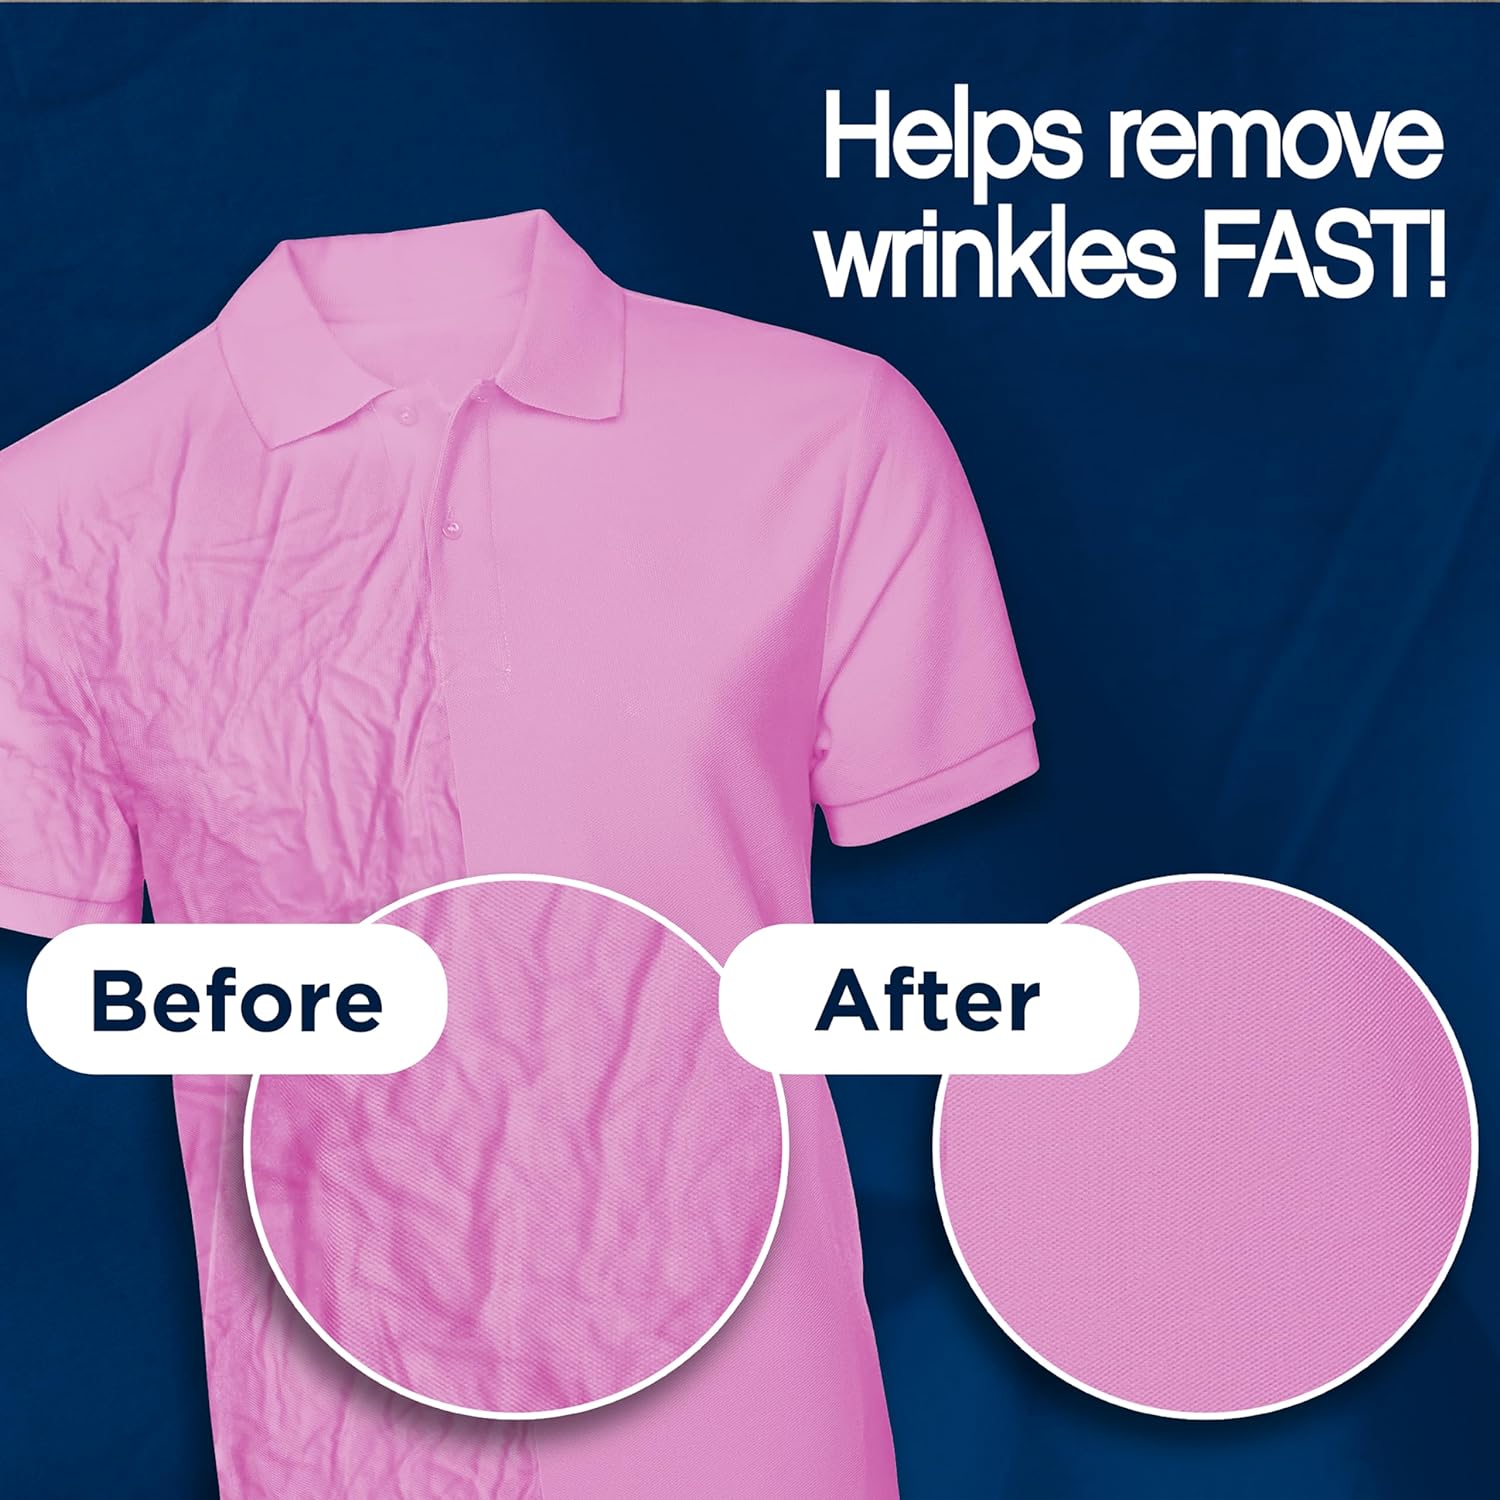 Downy Wrinkle Releaser Spray, All in One Formula, Removes Wrinkles, Static and Odor Eliminator, Light Fresh Scent, 9.7 Fl Oz, Pack of 2 : Health & Household